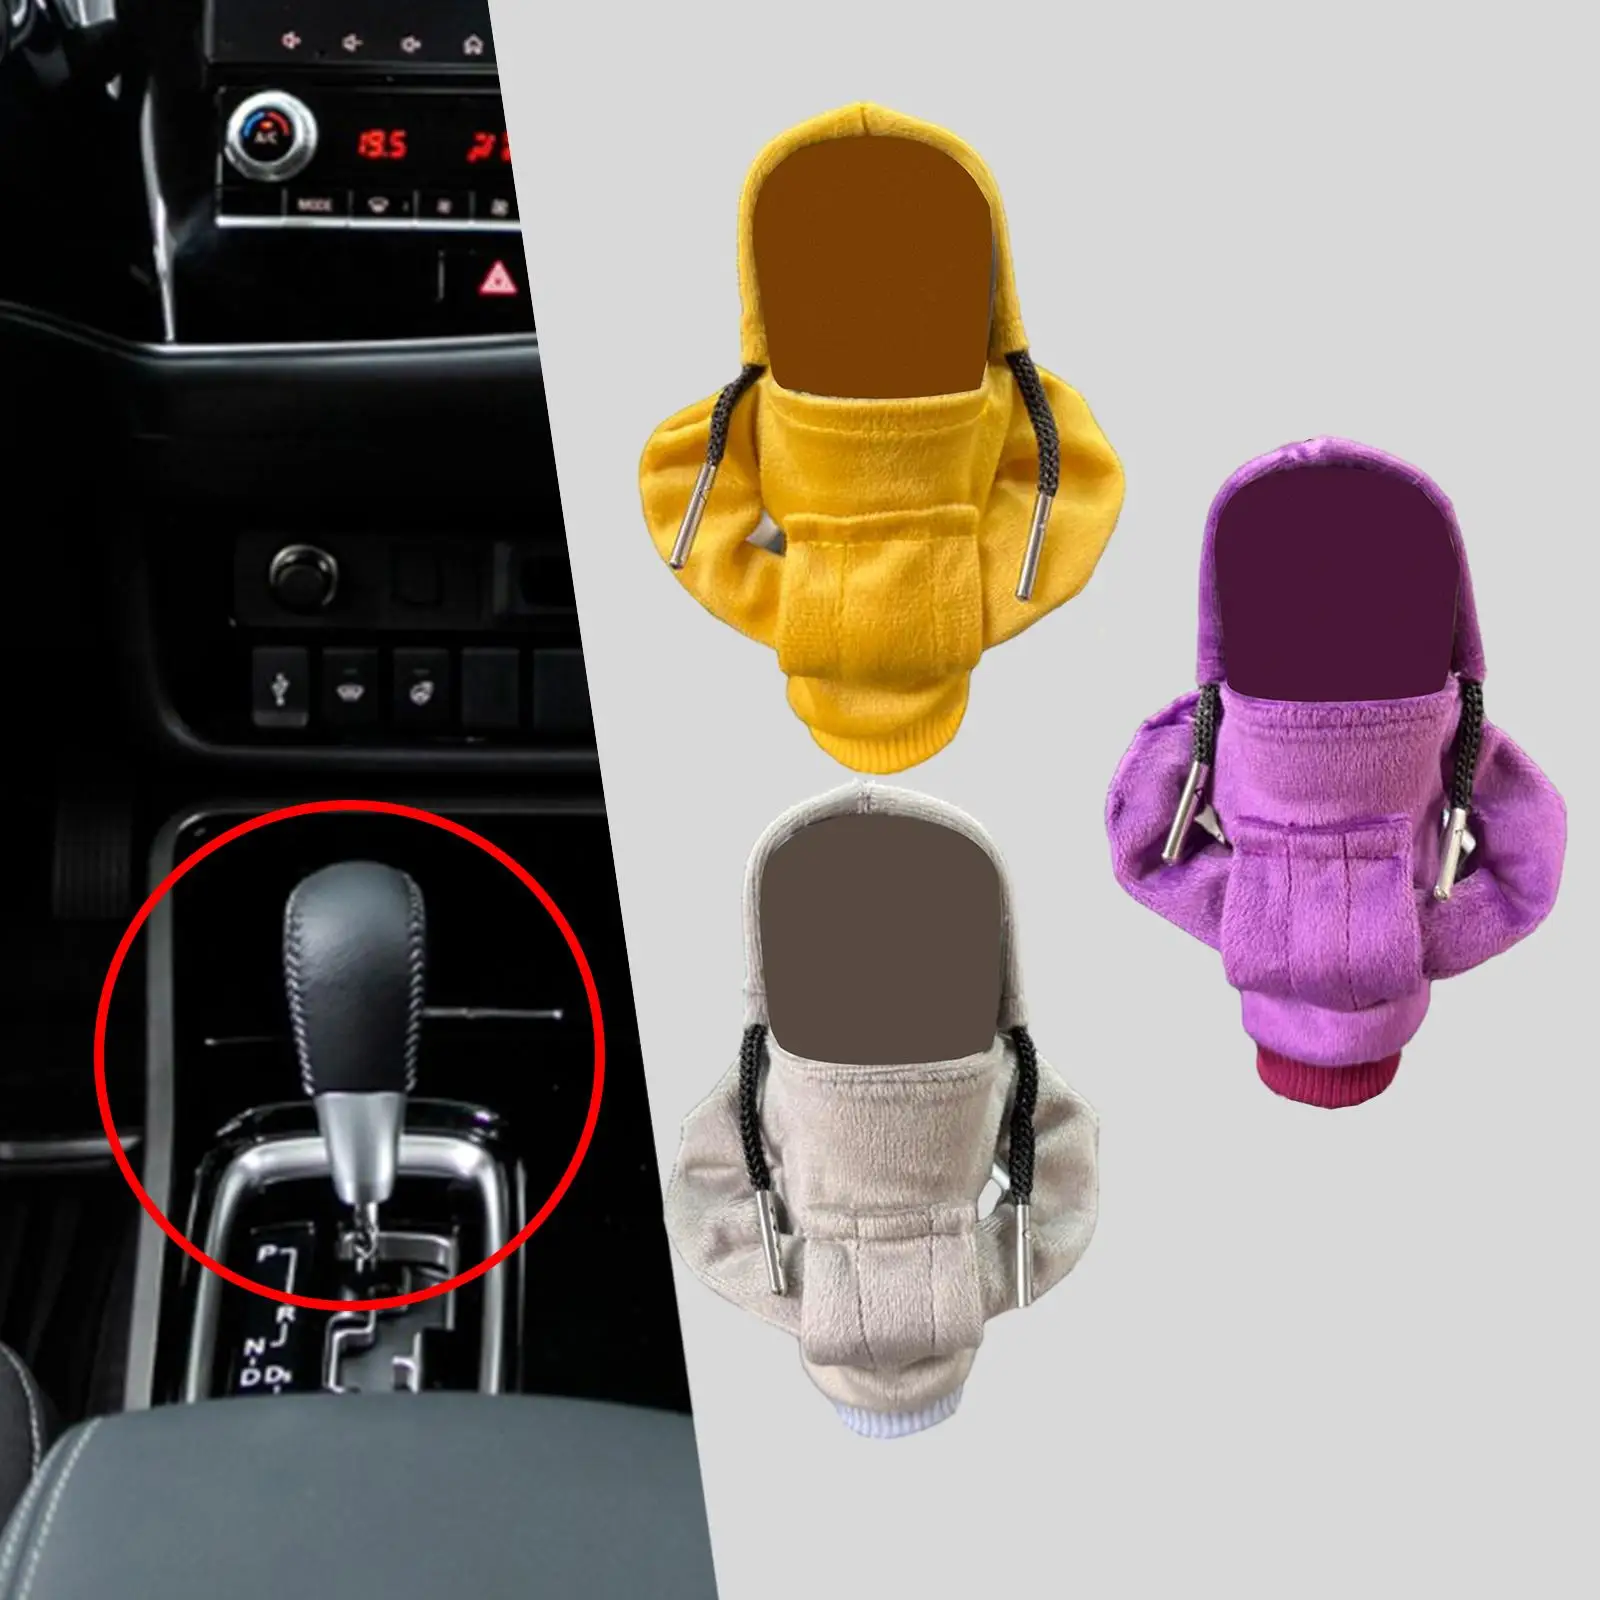 Auto Gear Shifter Knob Cover Cute Gear Protector Universal Car Interior Accessories Gear Handle Decor for Car Women or Man